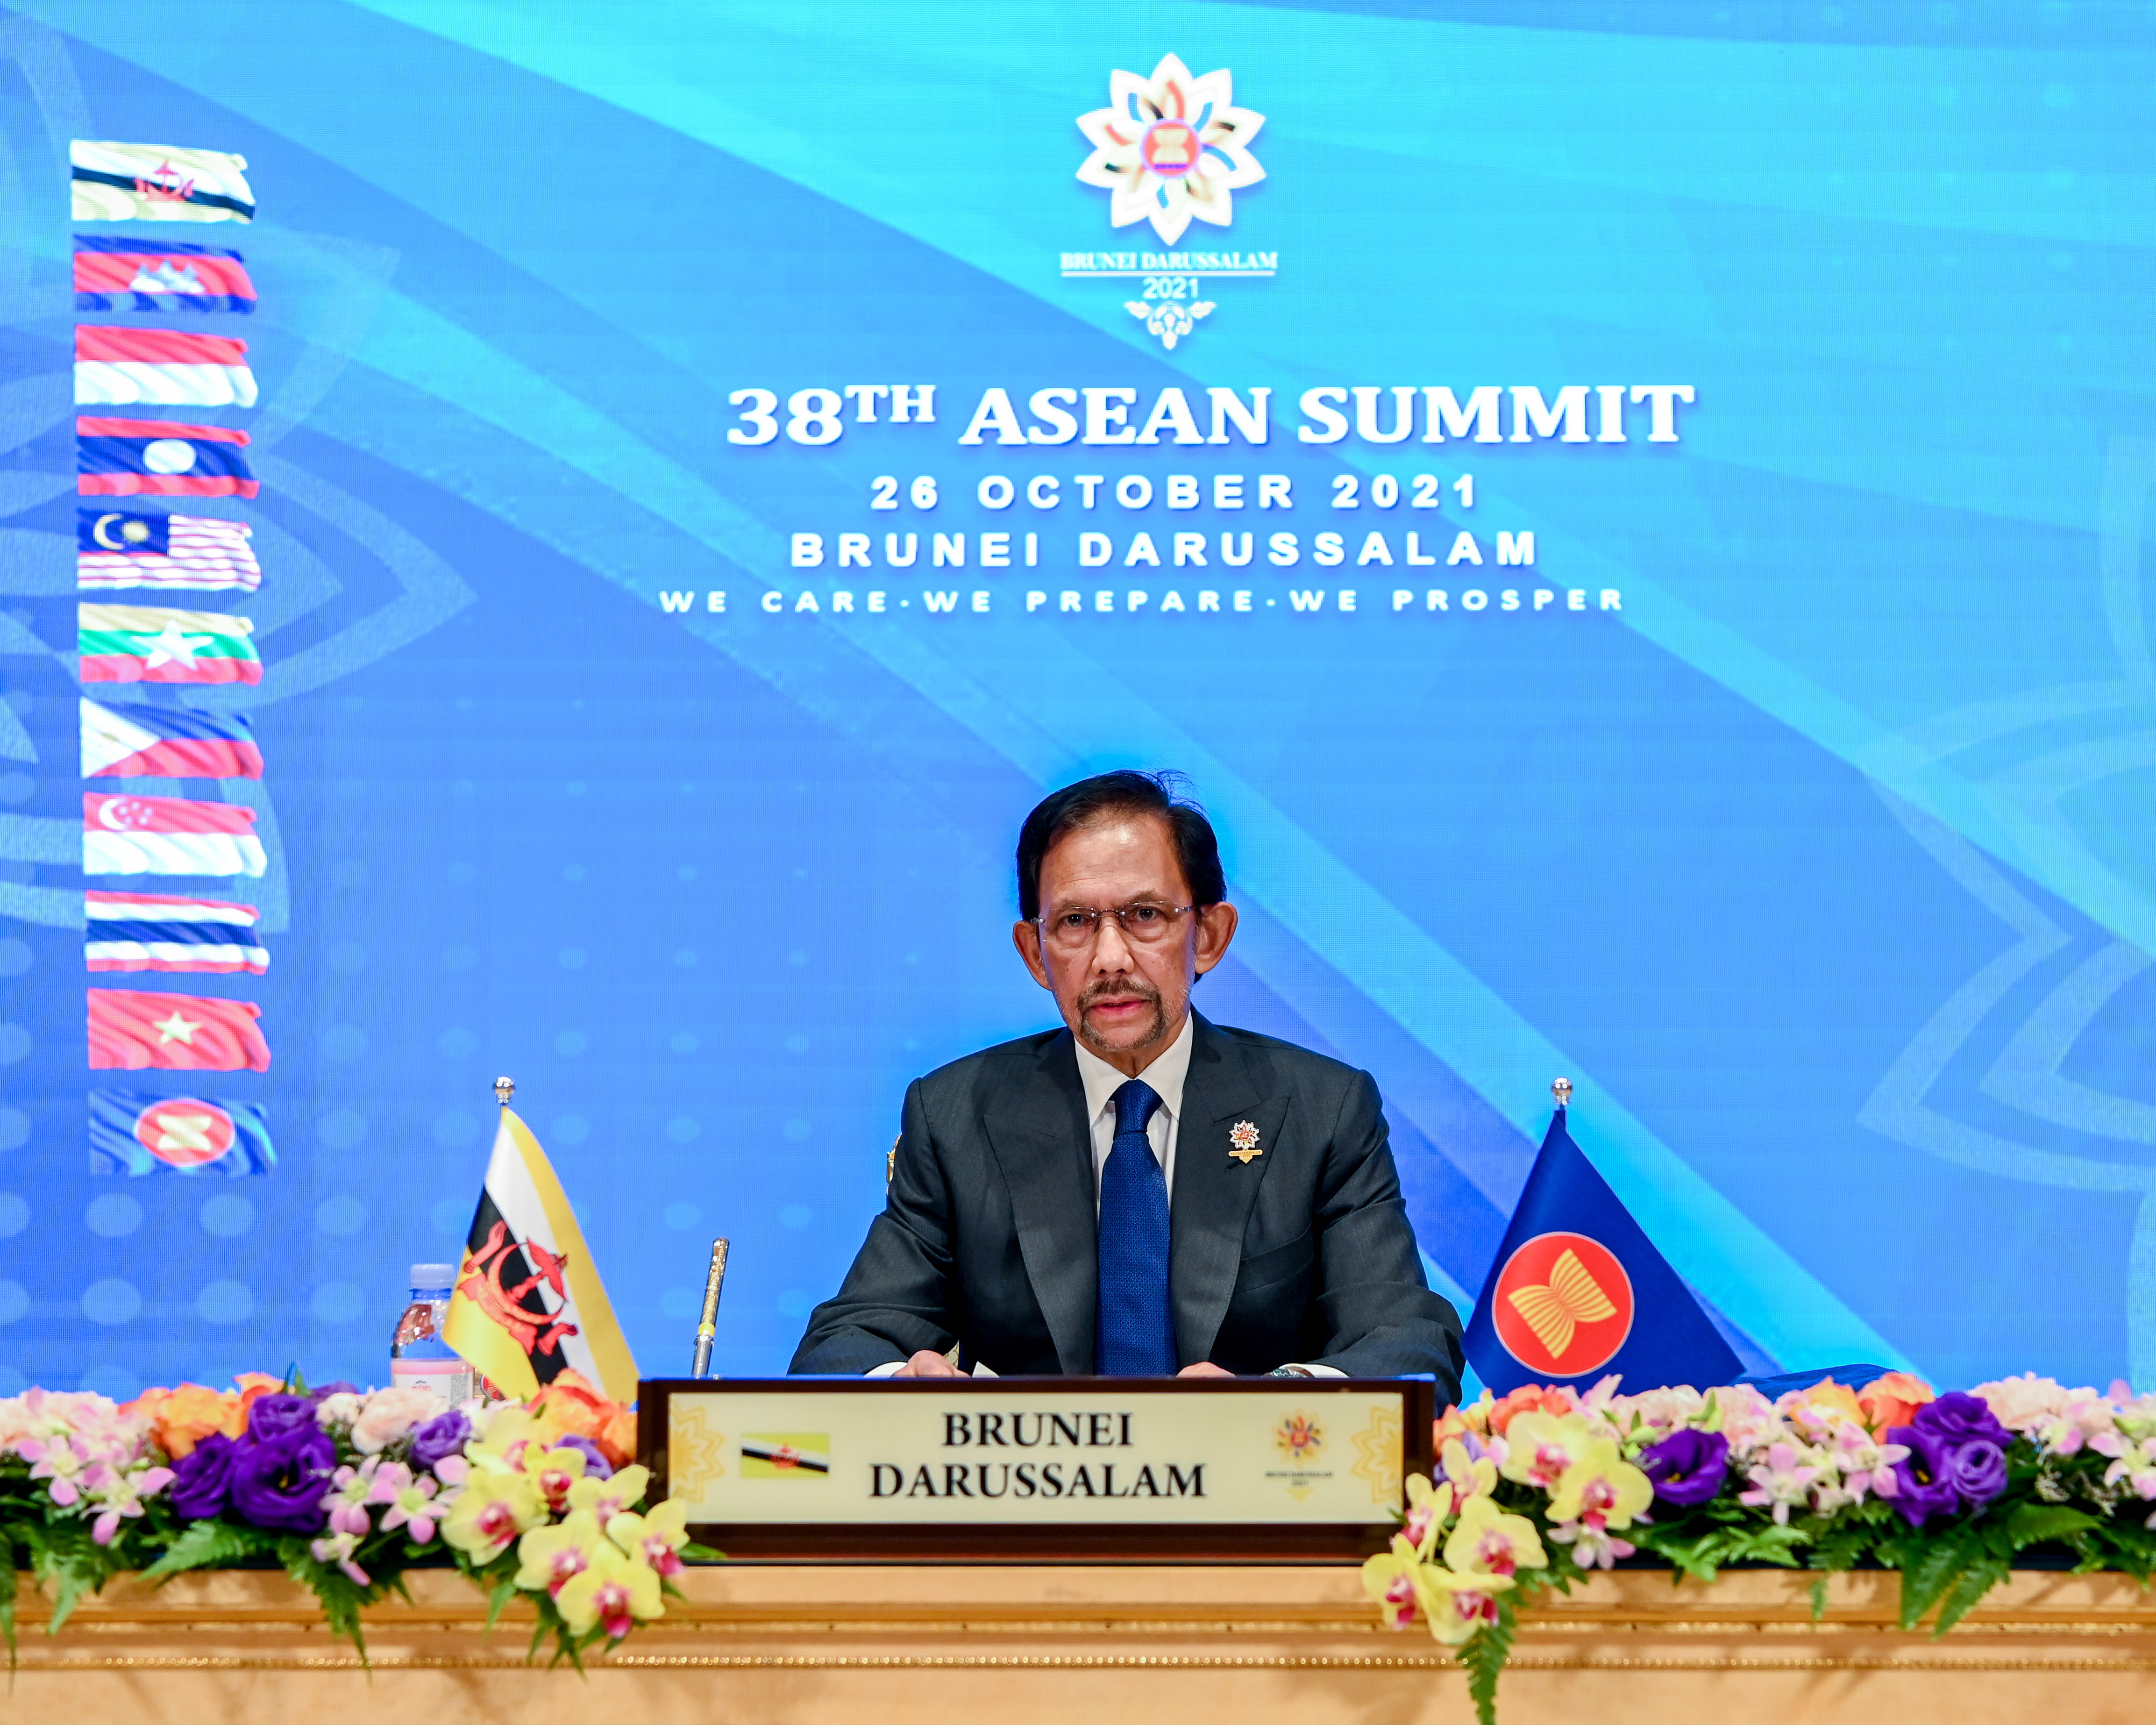 Brunei's Sultan Hassanal Bolkiah speaks during the virtual ASEAN Summit, hosted by ASEAN Summit Brunei, in Bandar Seri Begawan, Brunei October 26, 2021. ASEAN SUMMIT 2021 HOST PHOTO/Handout via REUTERS